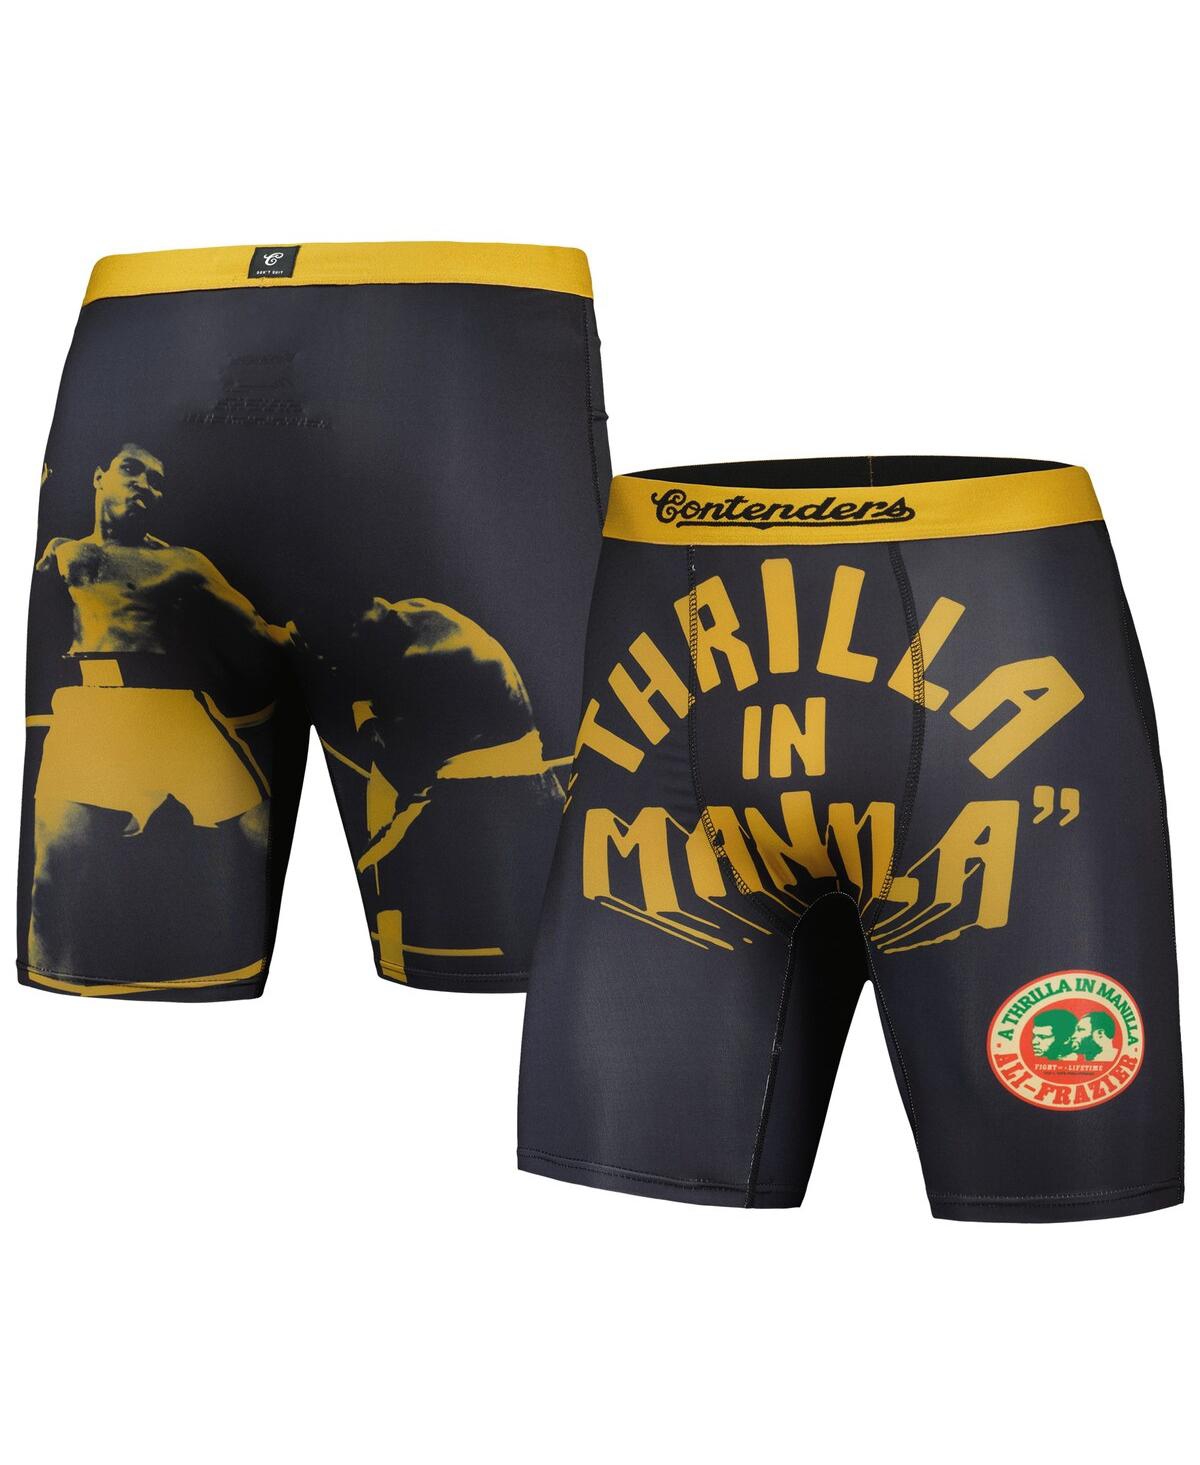 Men's Contenders Clothing Black Muhammad Ali "Thrilla in Manilla" Boxer Briefs - Black